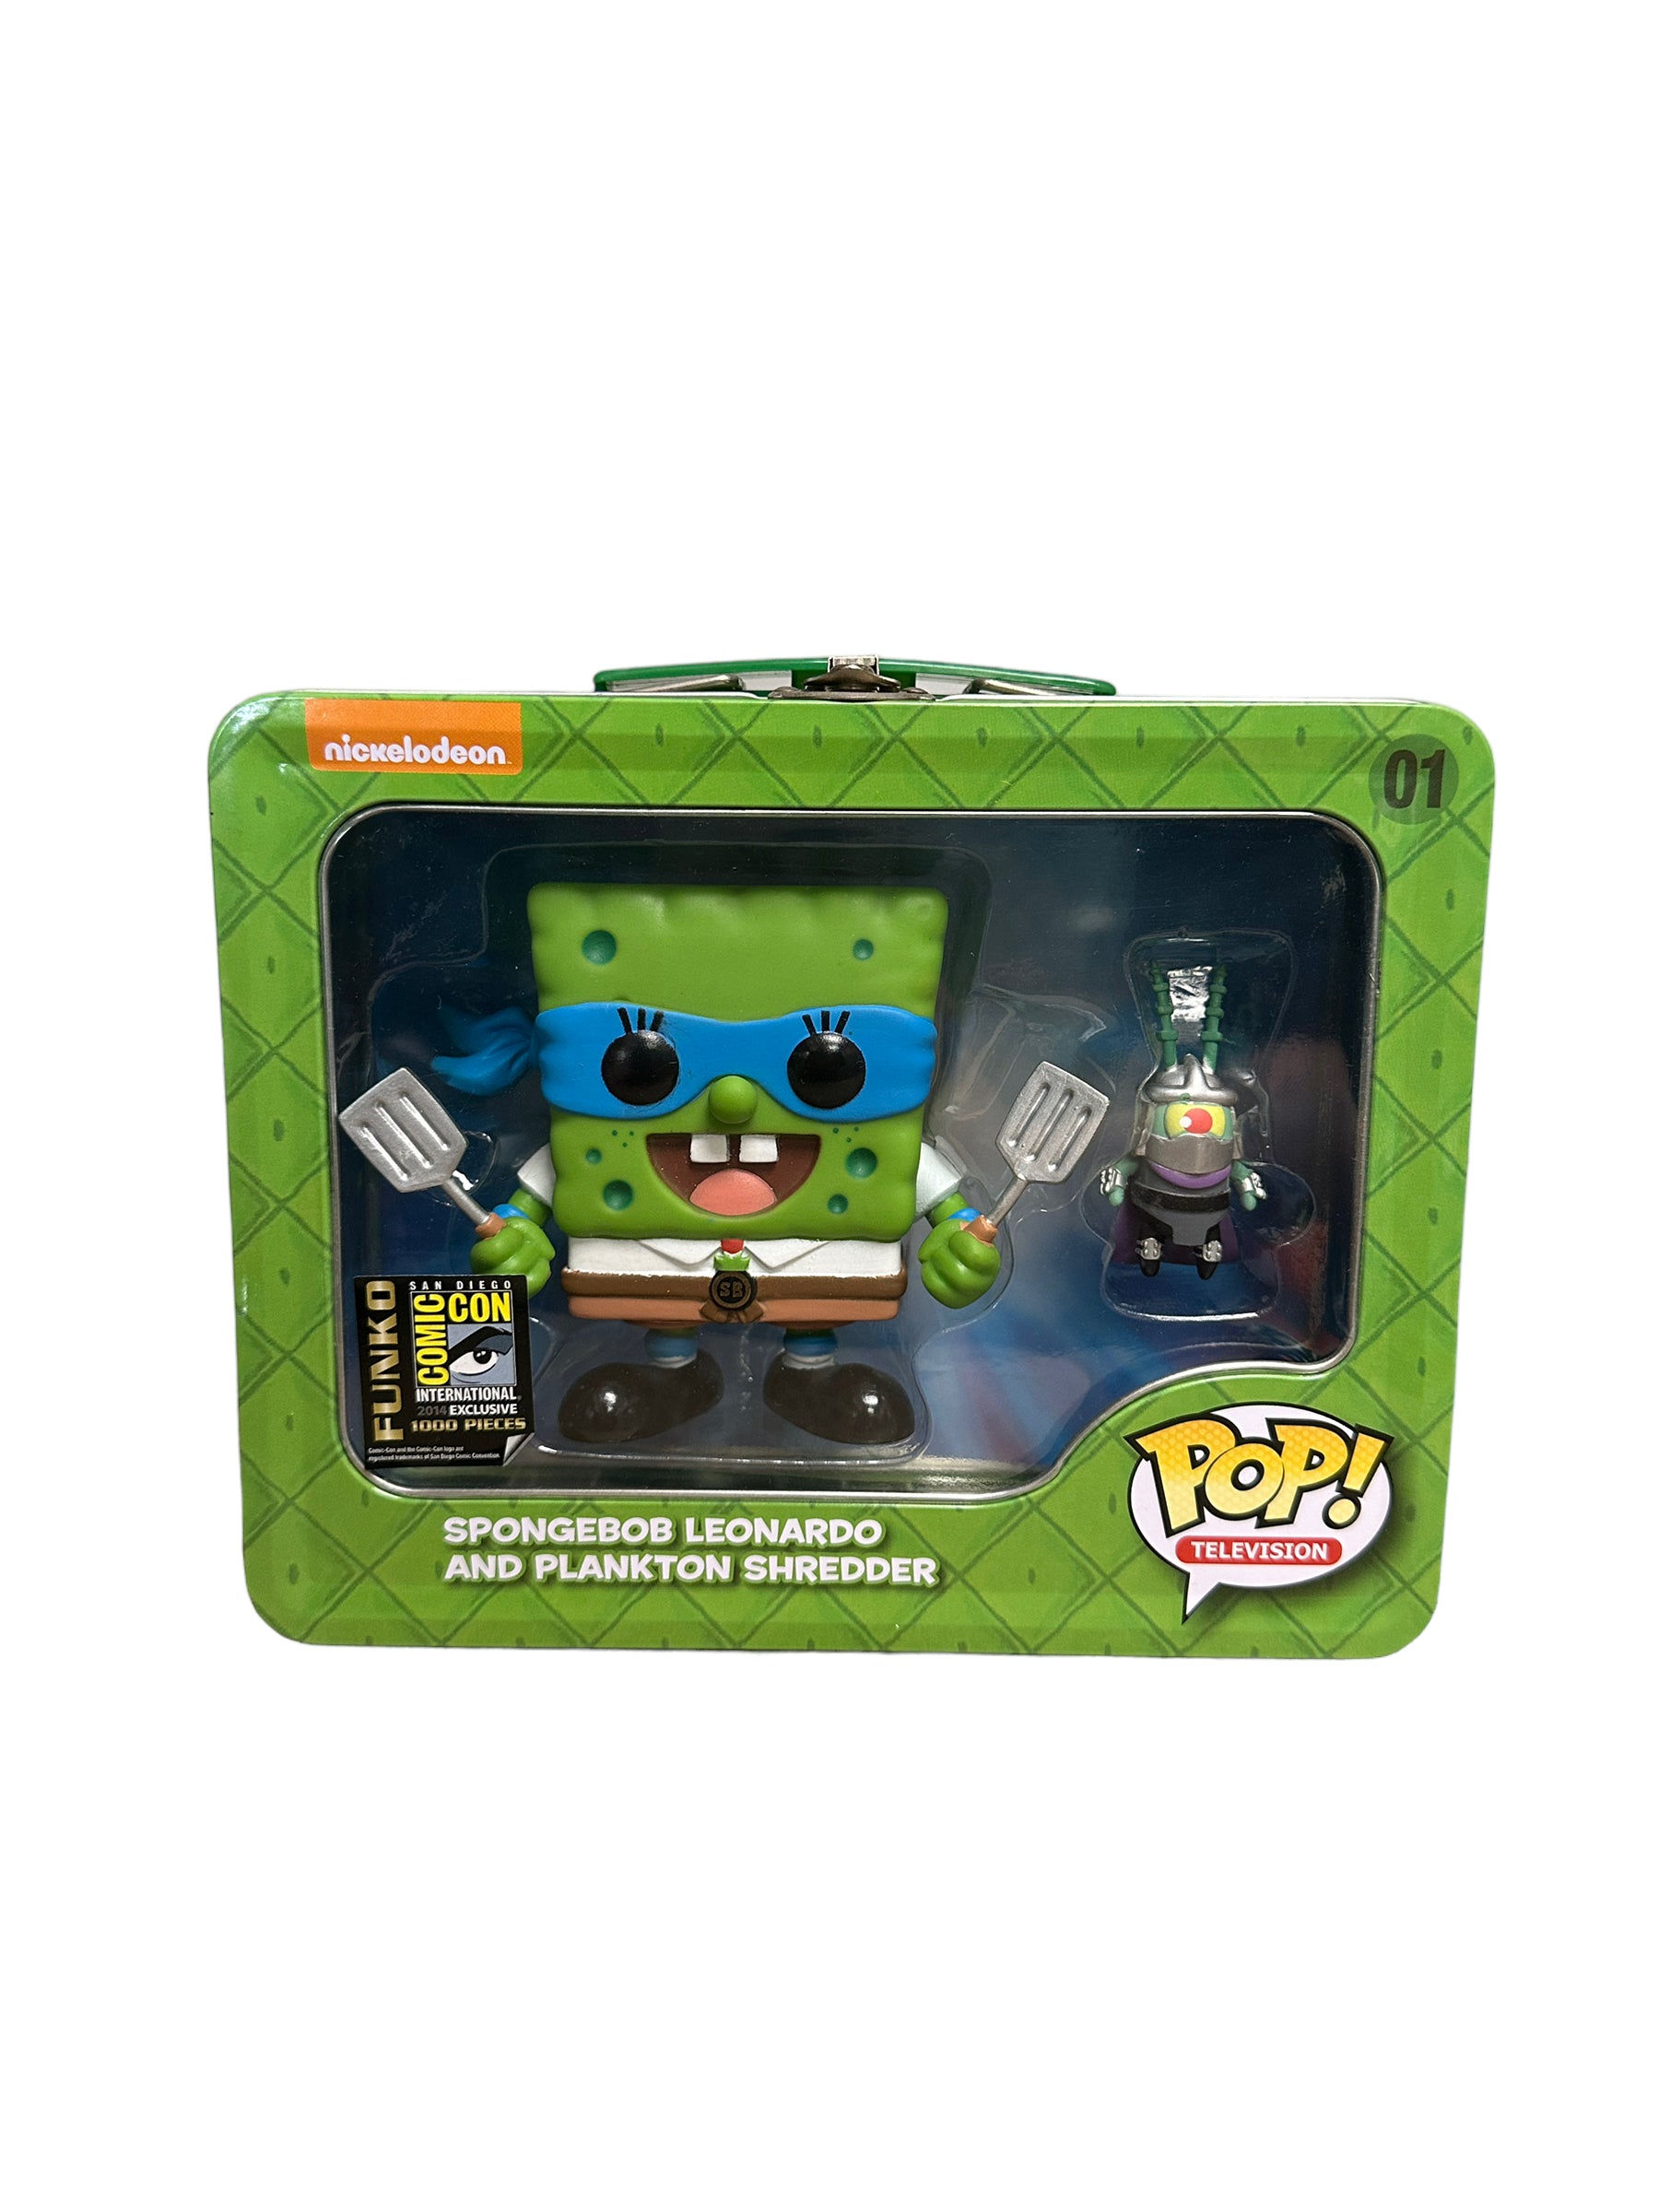 Spongebob Leonardo and Plankton Shredder #01 Funko Pop Lunchbox Tin! - Spongebob Squarepants x Teenage Mutant Ninja Turtles - SDCC 2014 Exclusive LE1000 Pcs - Condition 8/10